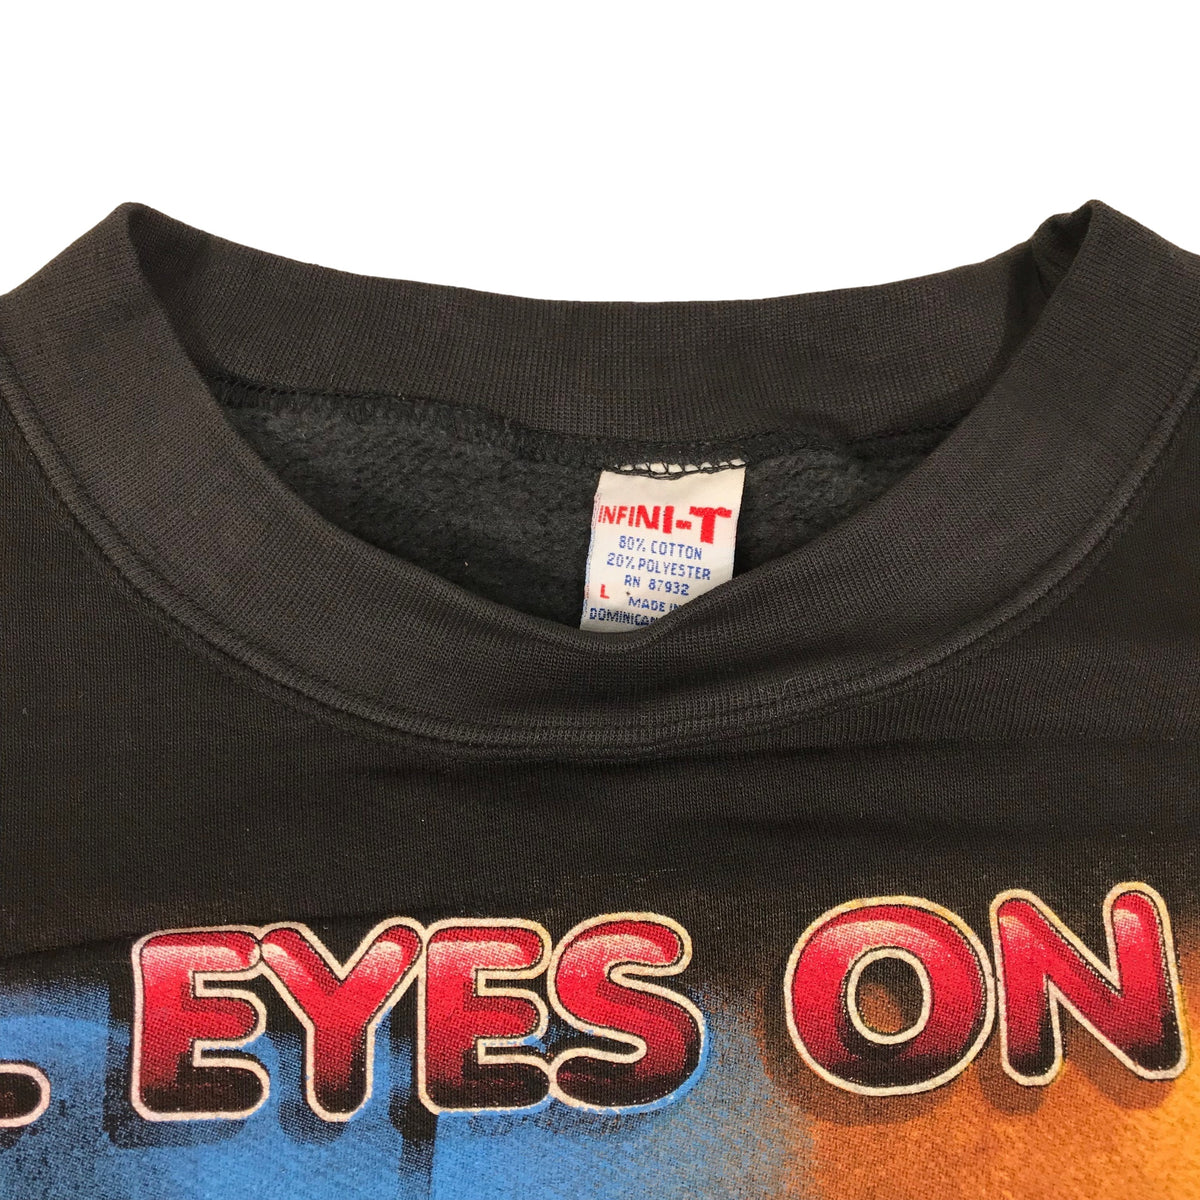 Vintage Tupac &quot;All Eyes On Me&quot; Crewneck Sweatshirt - jointcustodydc